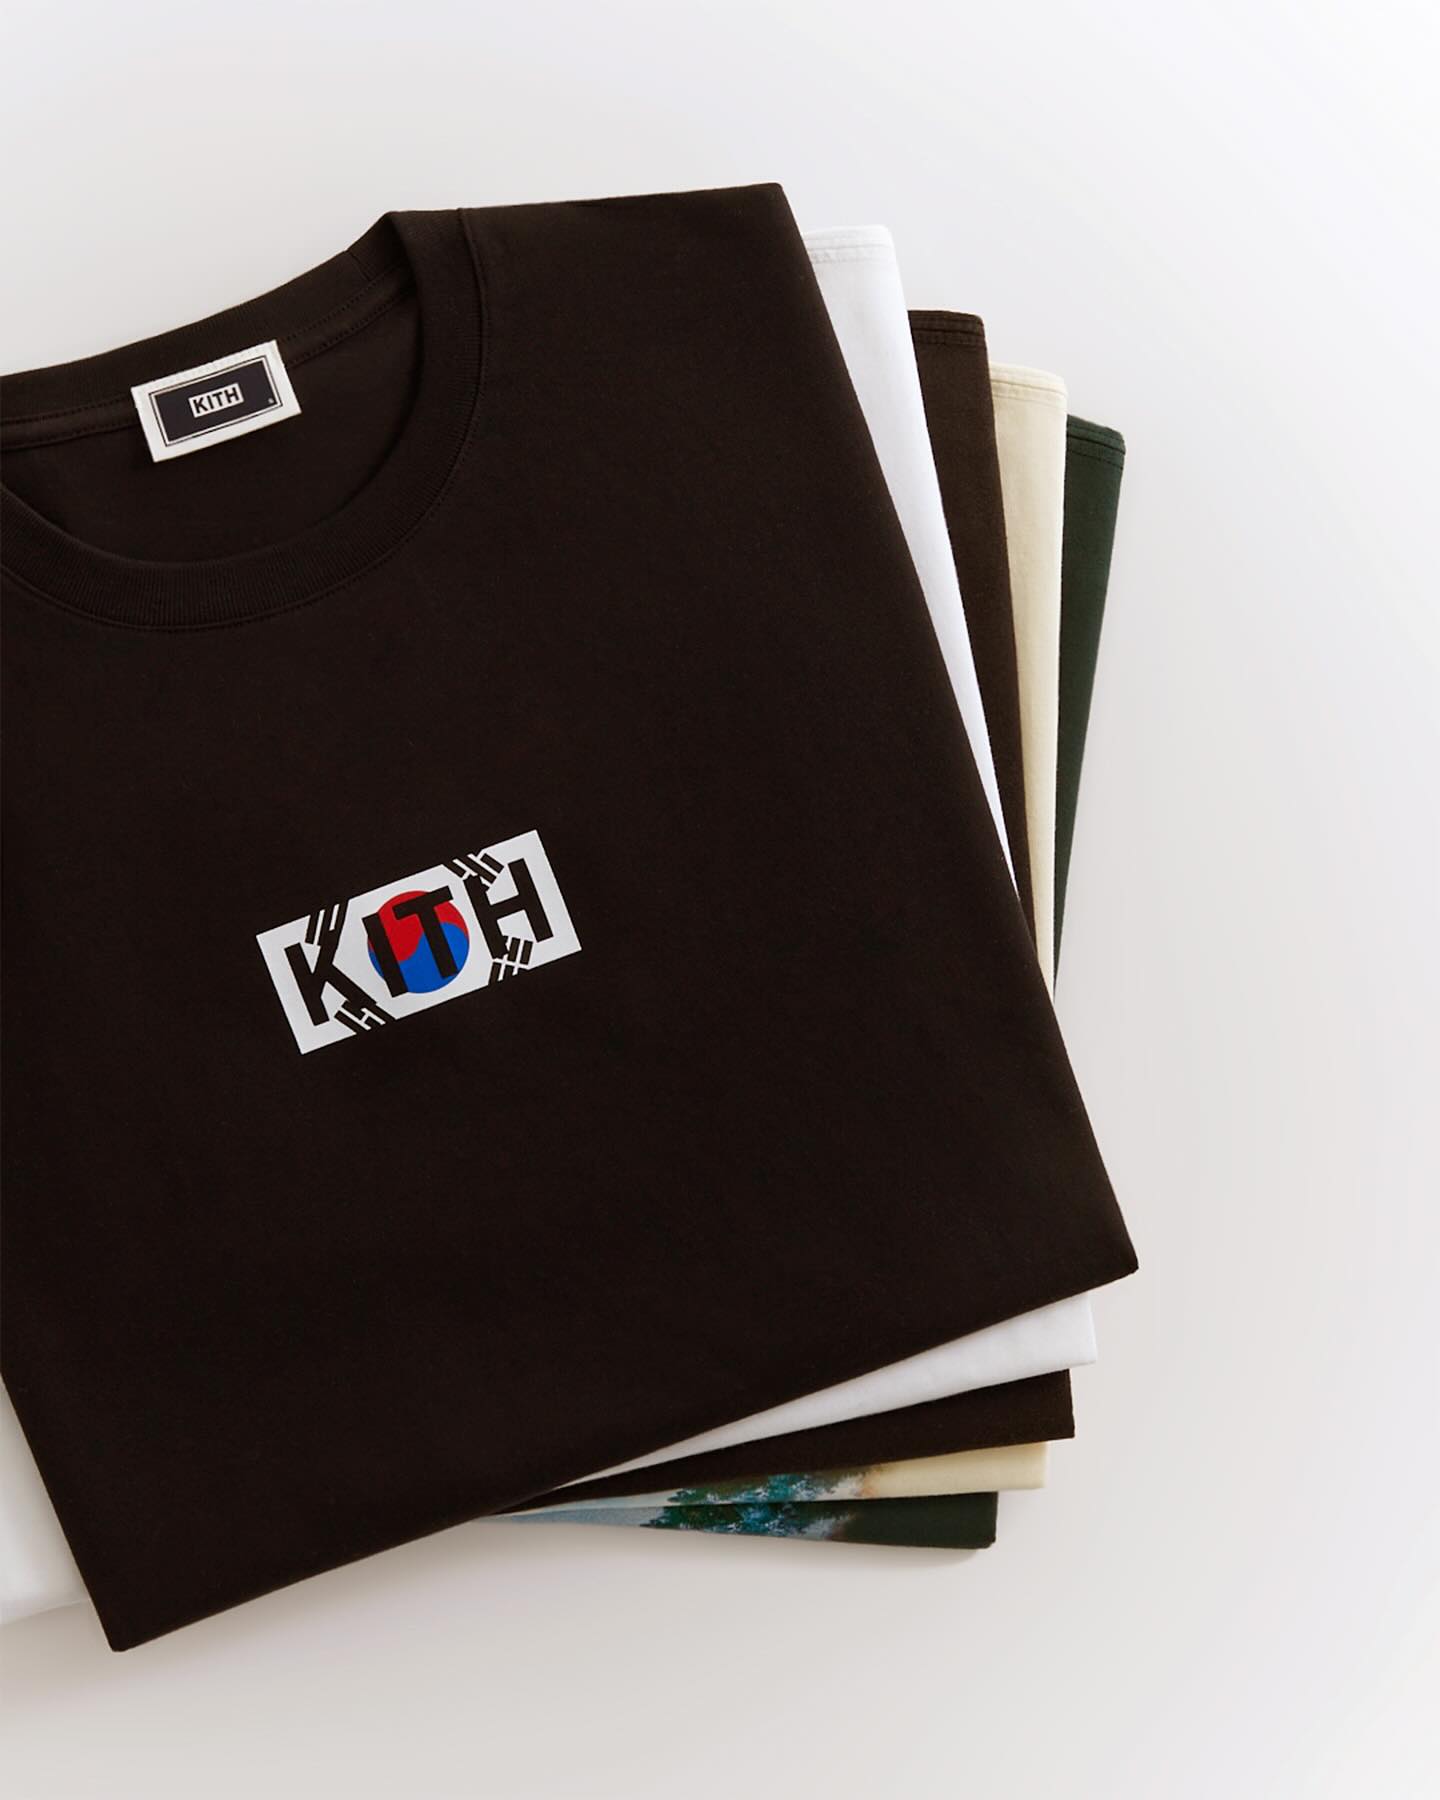 KITH が韓国店のオープン記念コレクションを発表